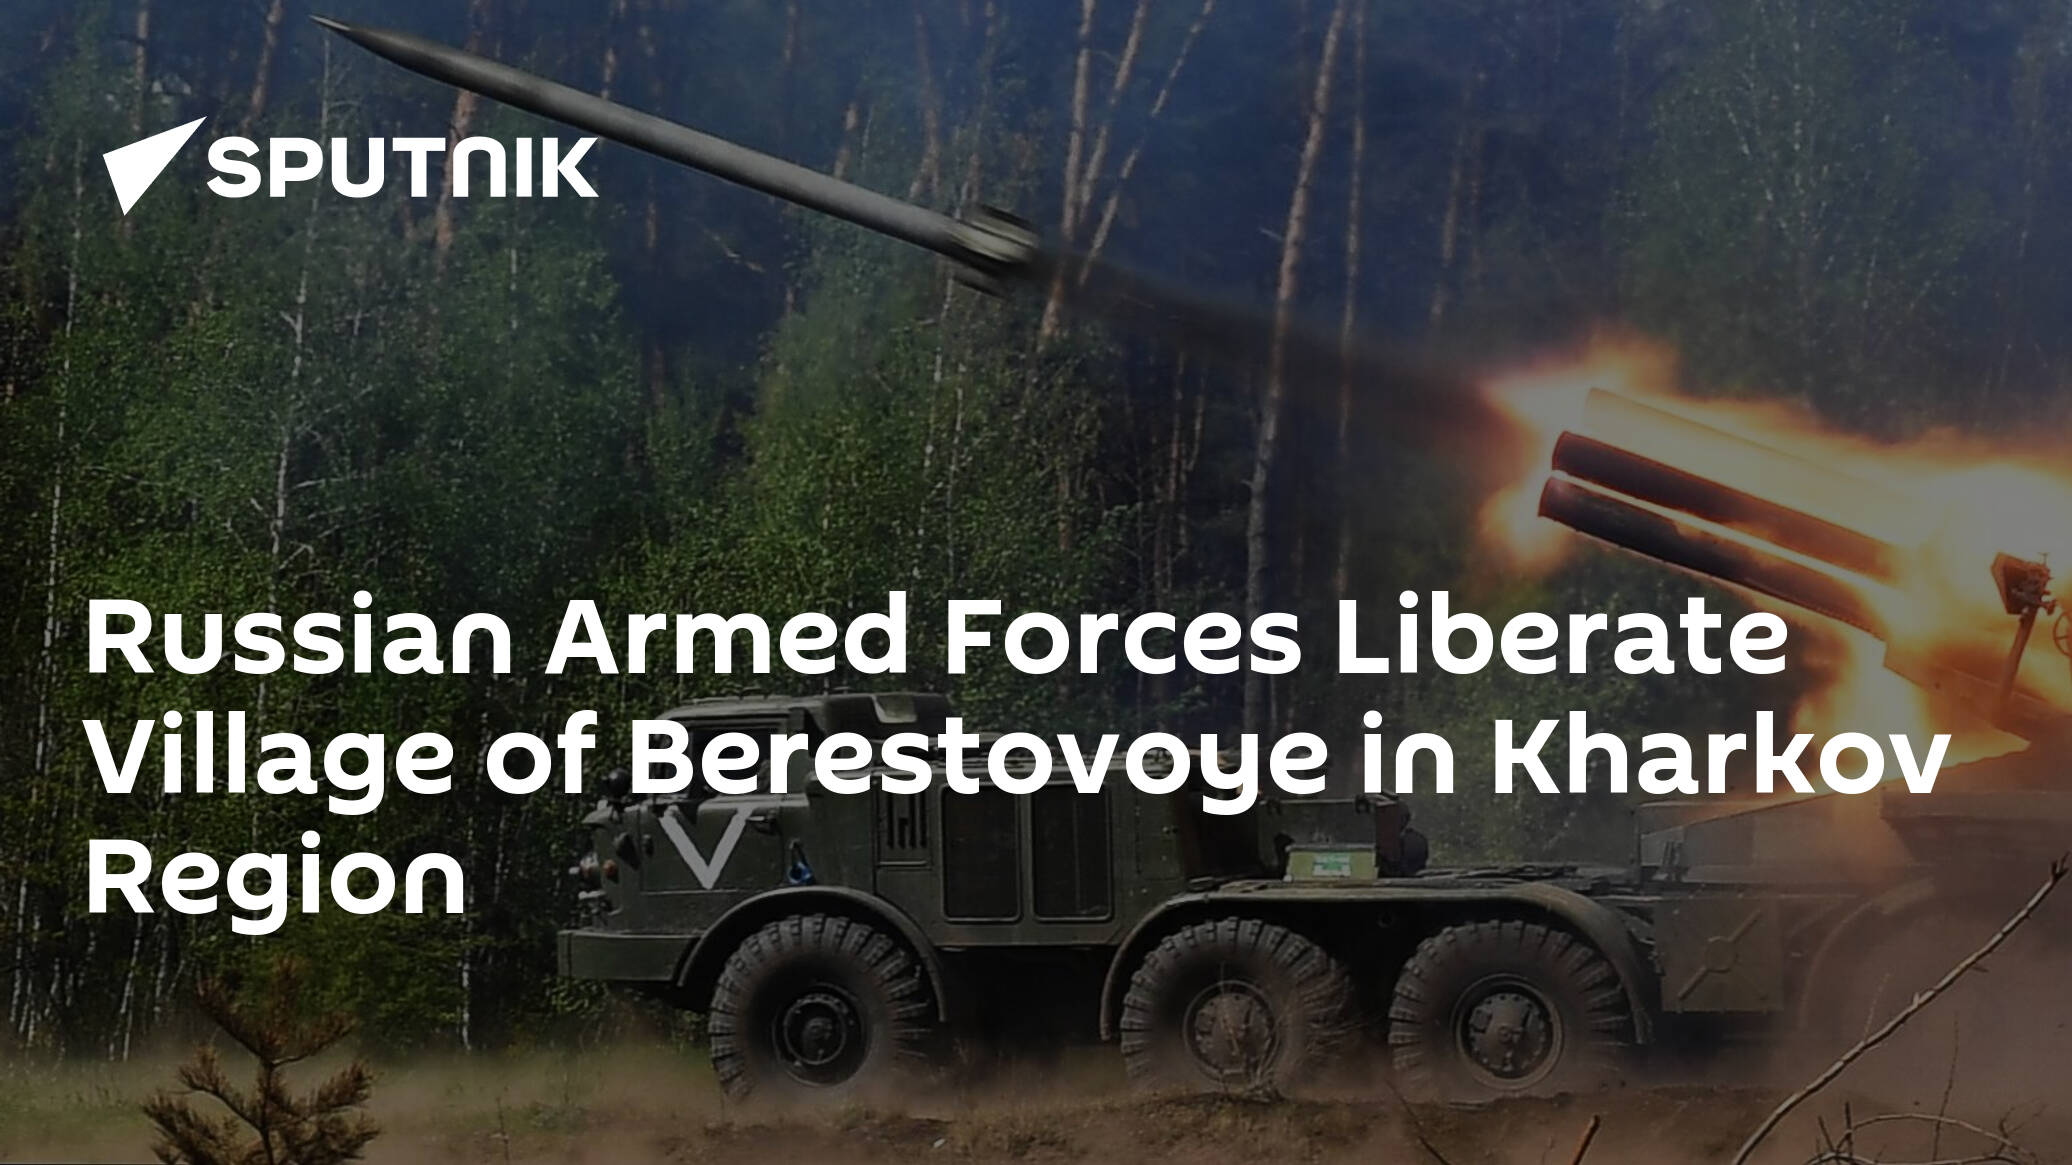 Russian Armed Forces Liberate Village of Berestovoye in Kharkov Region